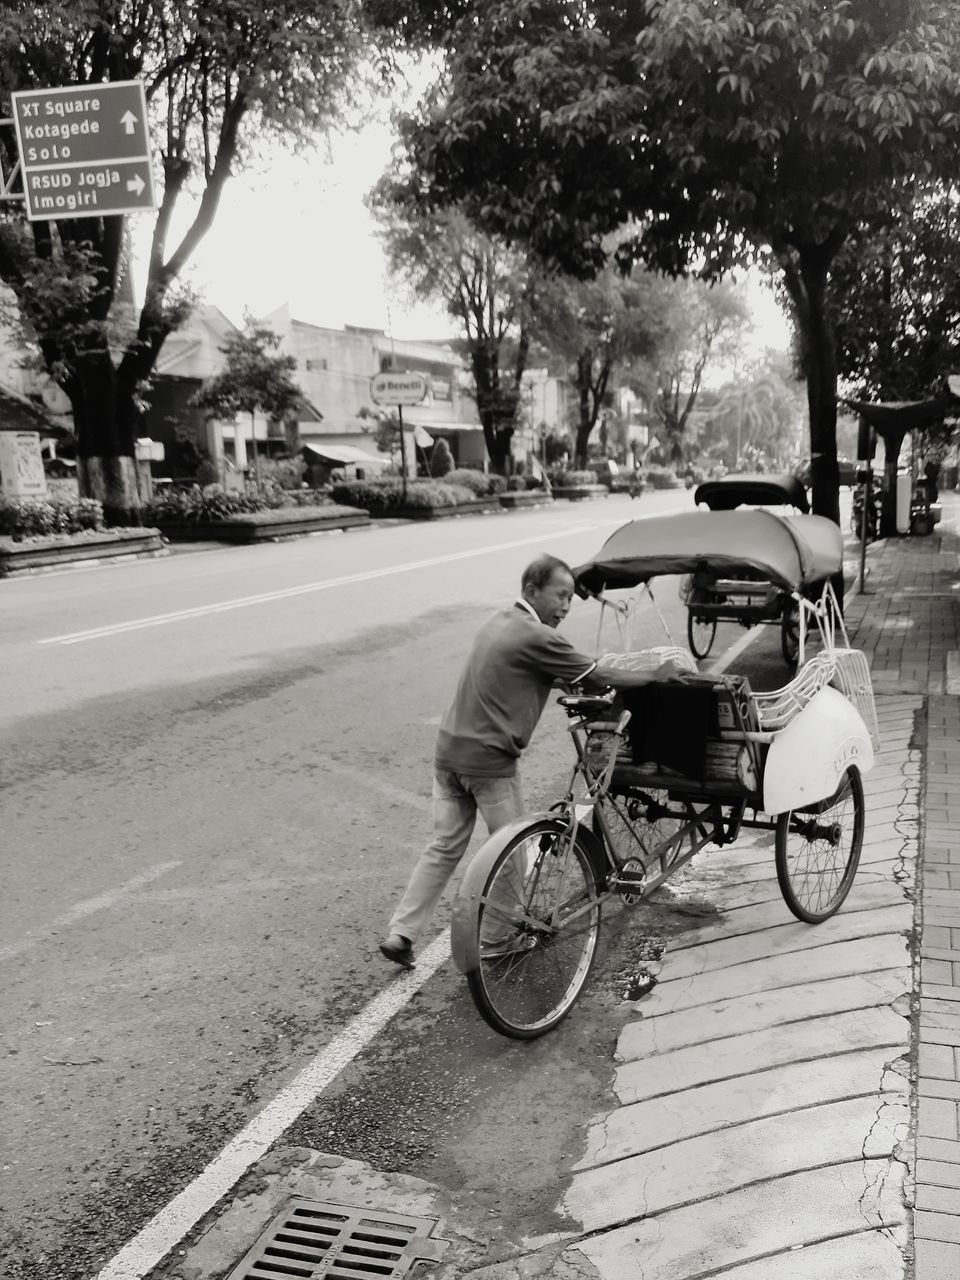 MAN RIDING BICYCLE ON STREET